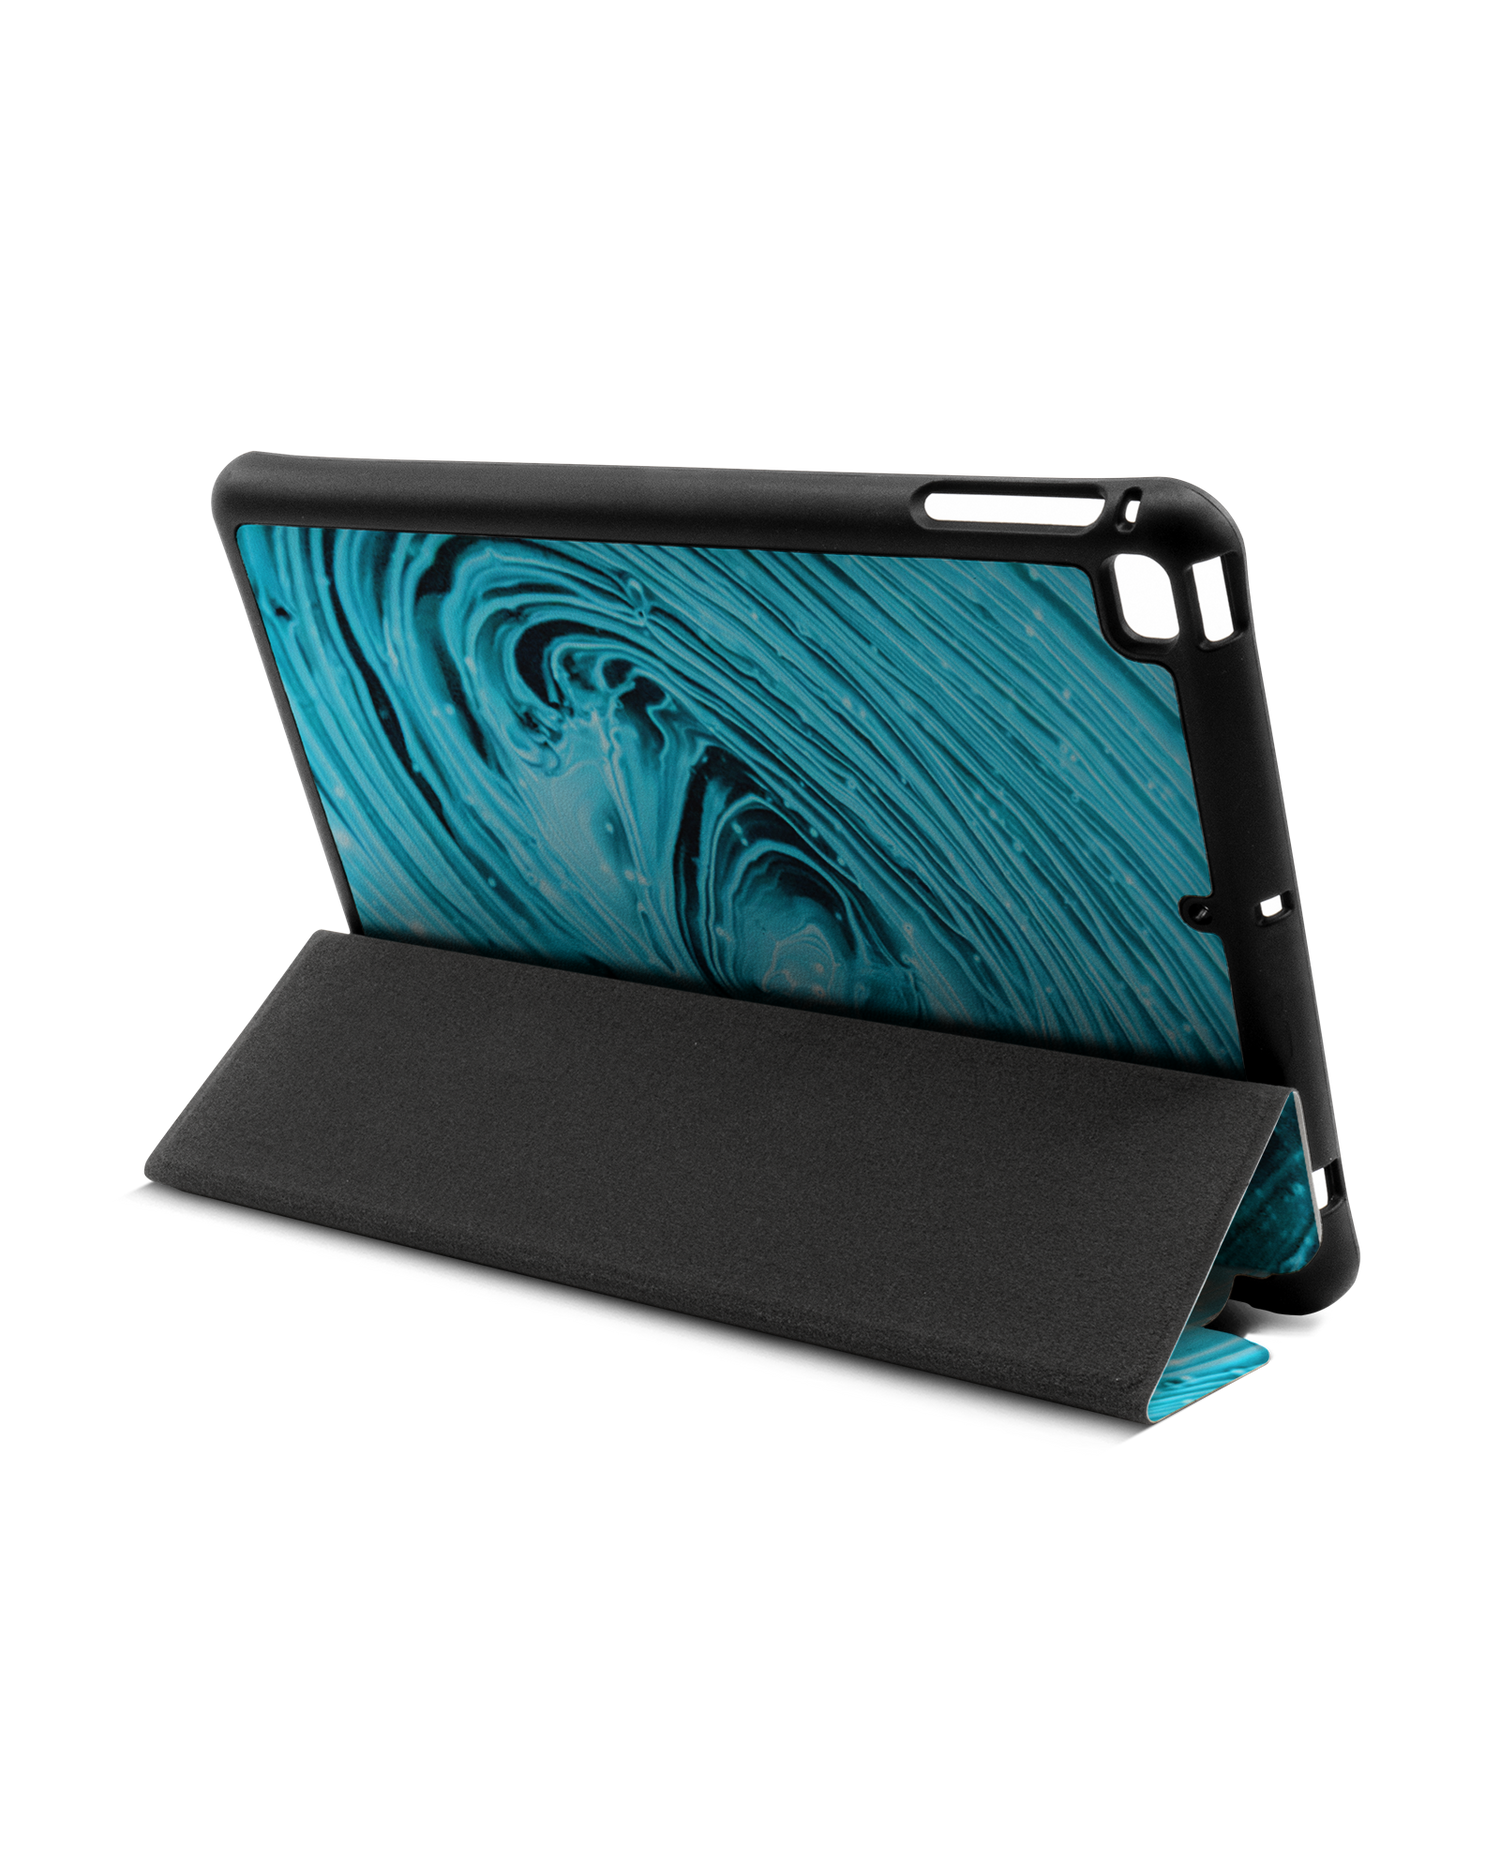 Turquoise Ripples iPad Hülle mit Stifthalter Apple iPad mini 5 (2019): Aufgestellt im Querformat von hinten